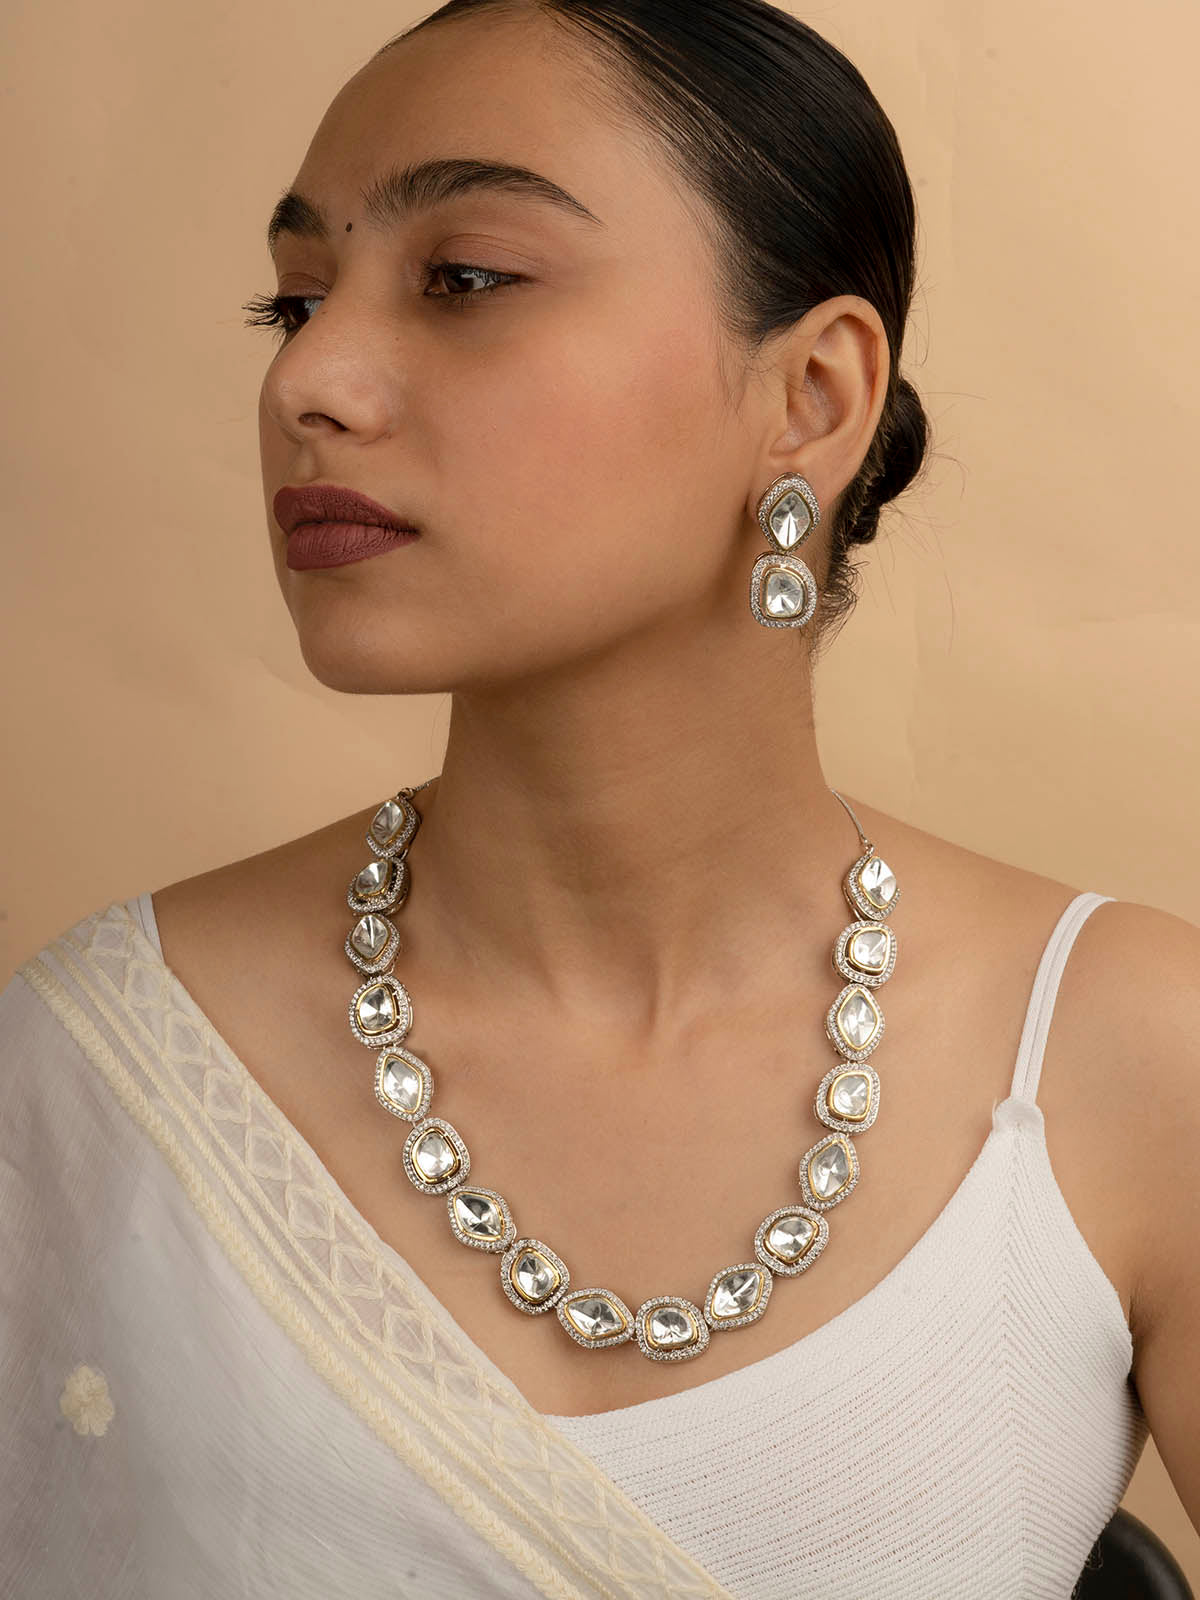 PK-S10 - White Color Gold Plated Faux Diamond Long Necklace Set